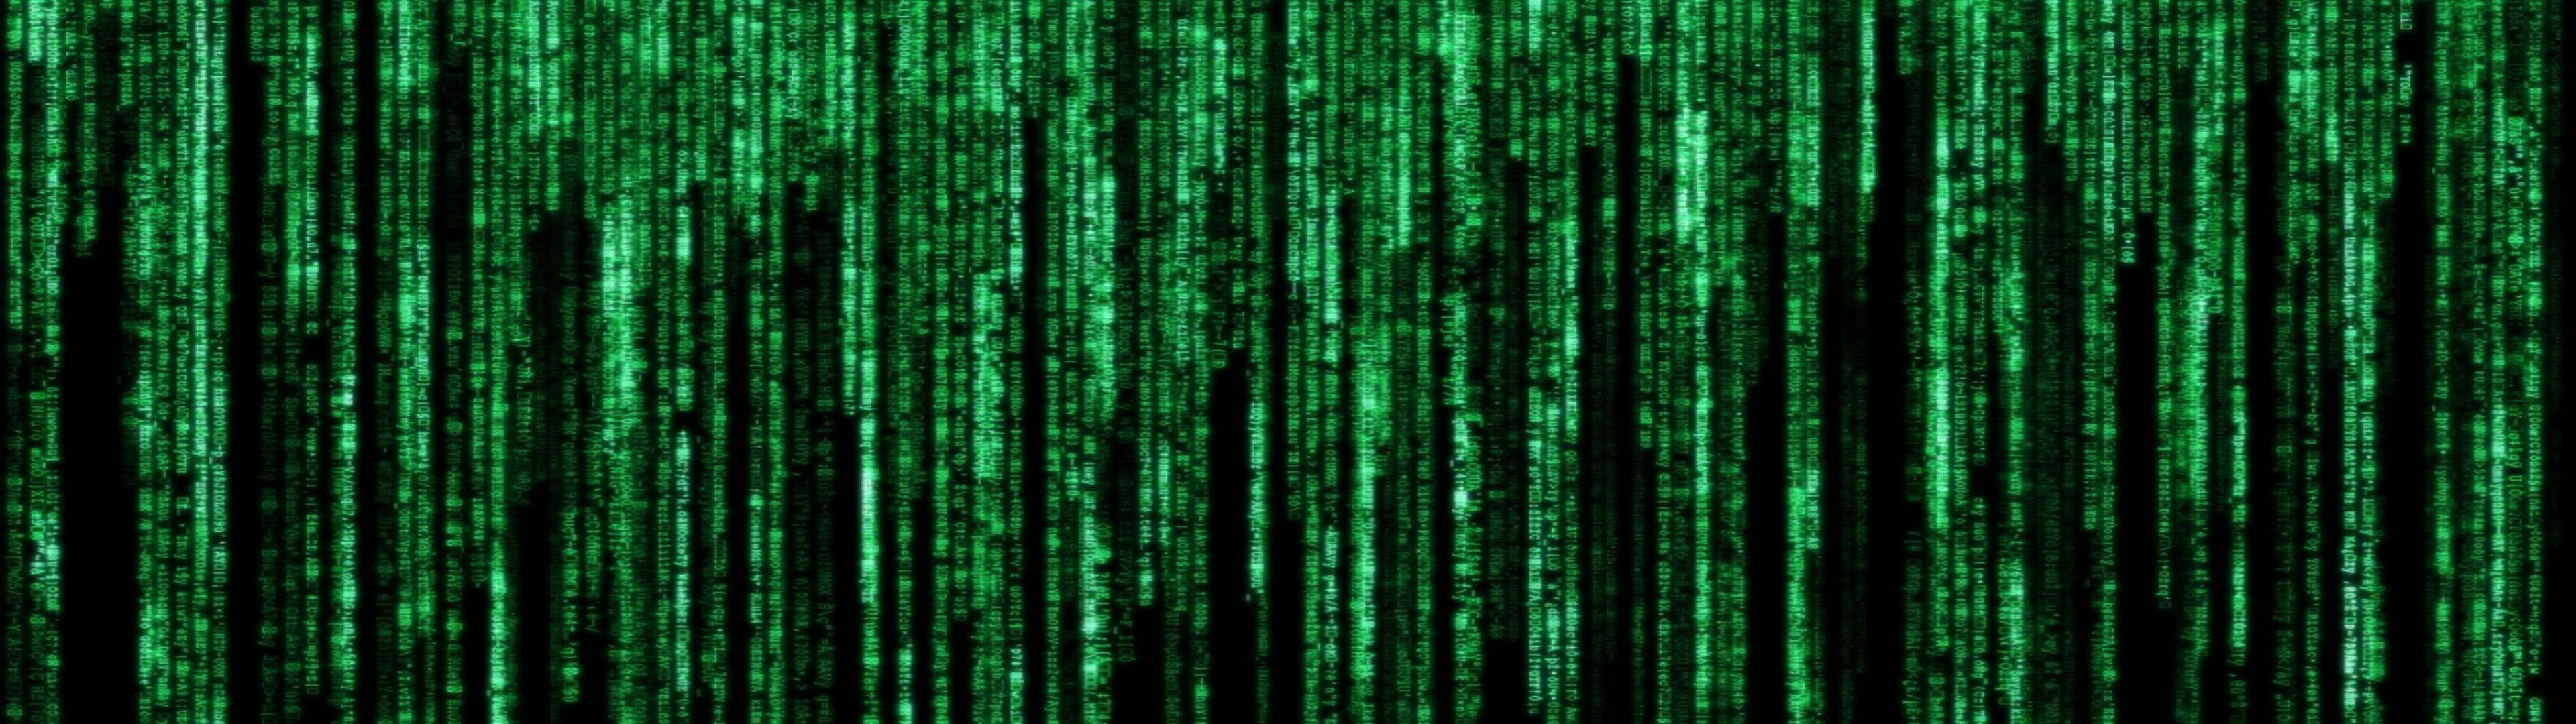 Green Binary Hacker Matrix Background